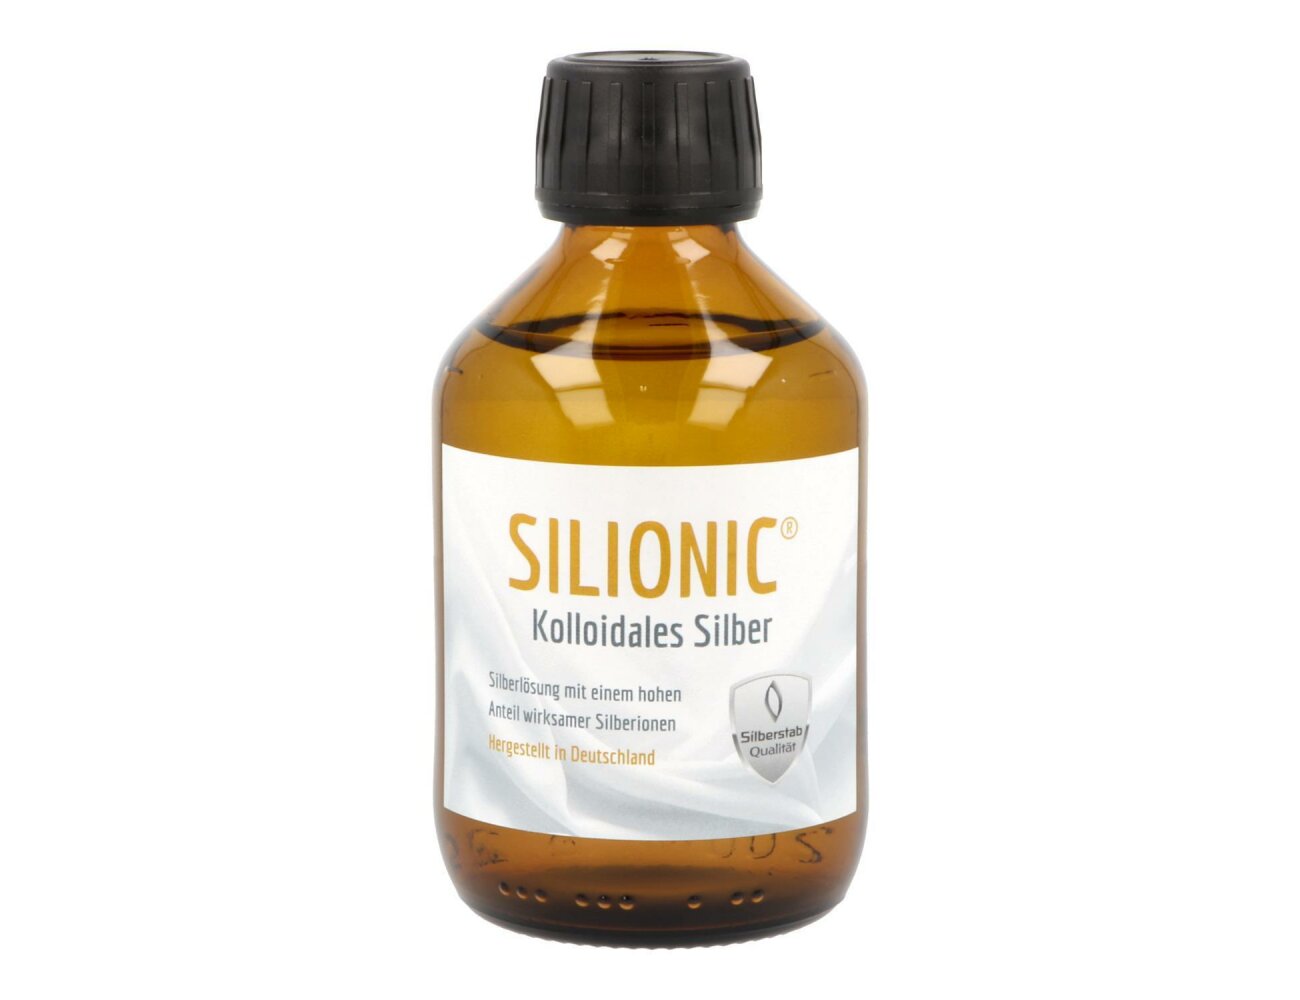 Silionic Kolloidales Silber, 100 ppm, 200 ml